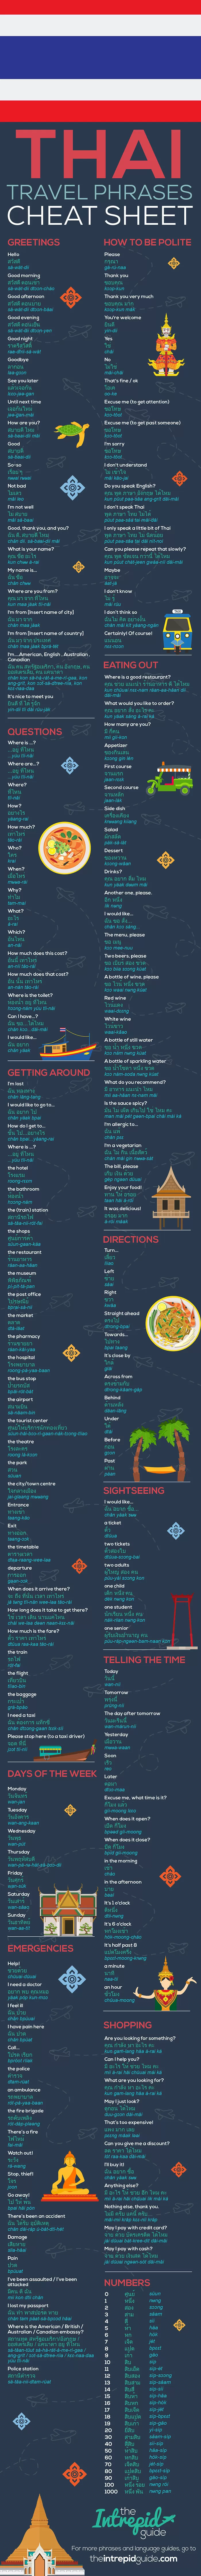 208 Basic Thai Phrases Essential for Travel